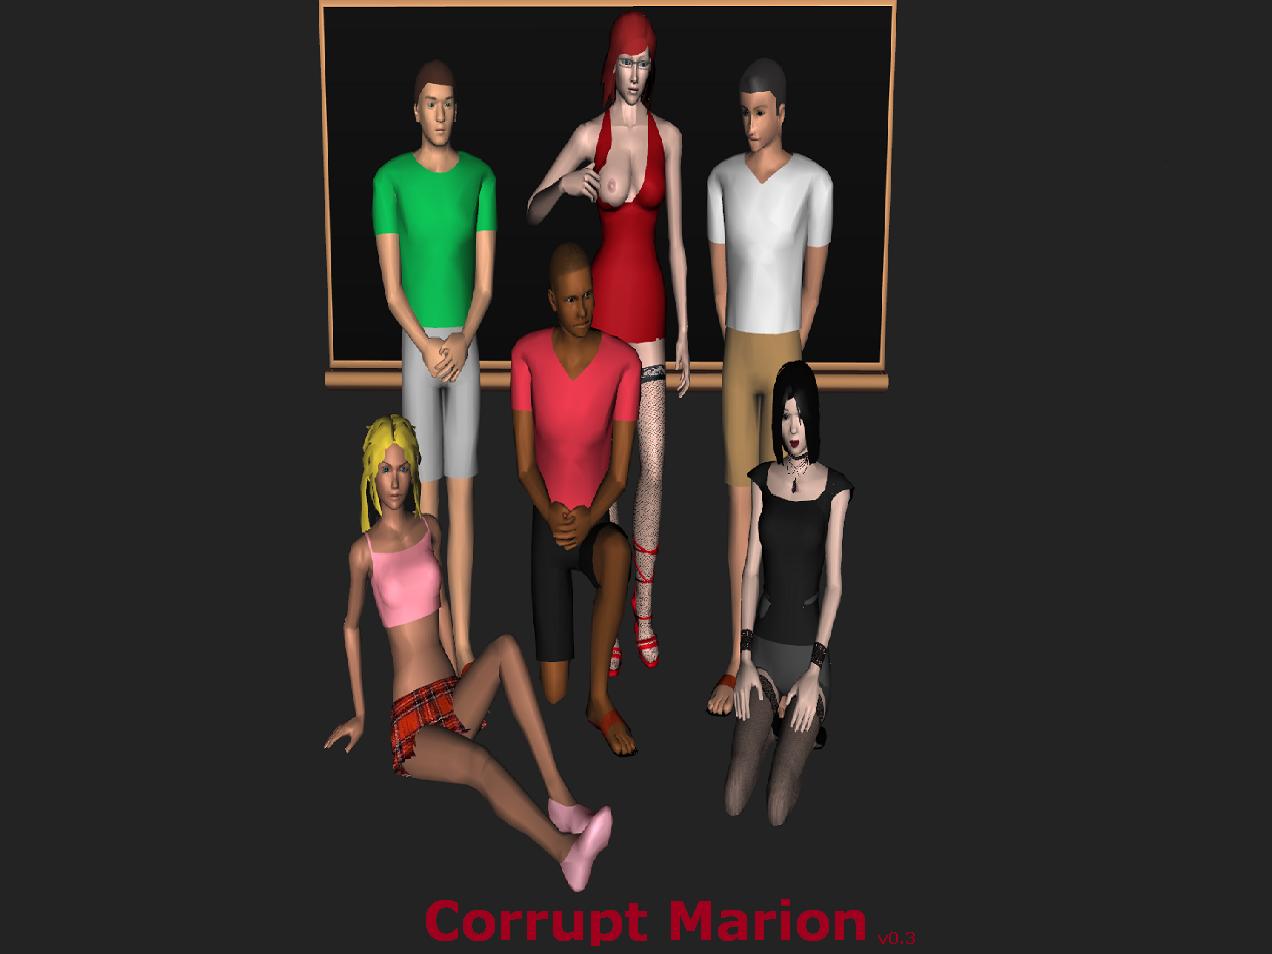 Corrupt Marion v0.3 by Mike Velesk